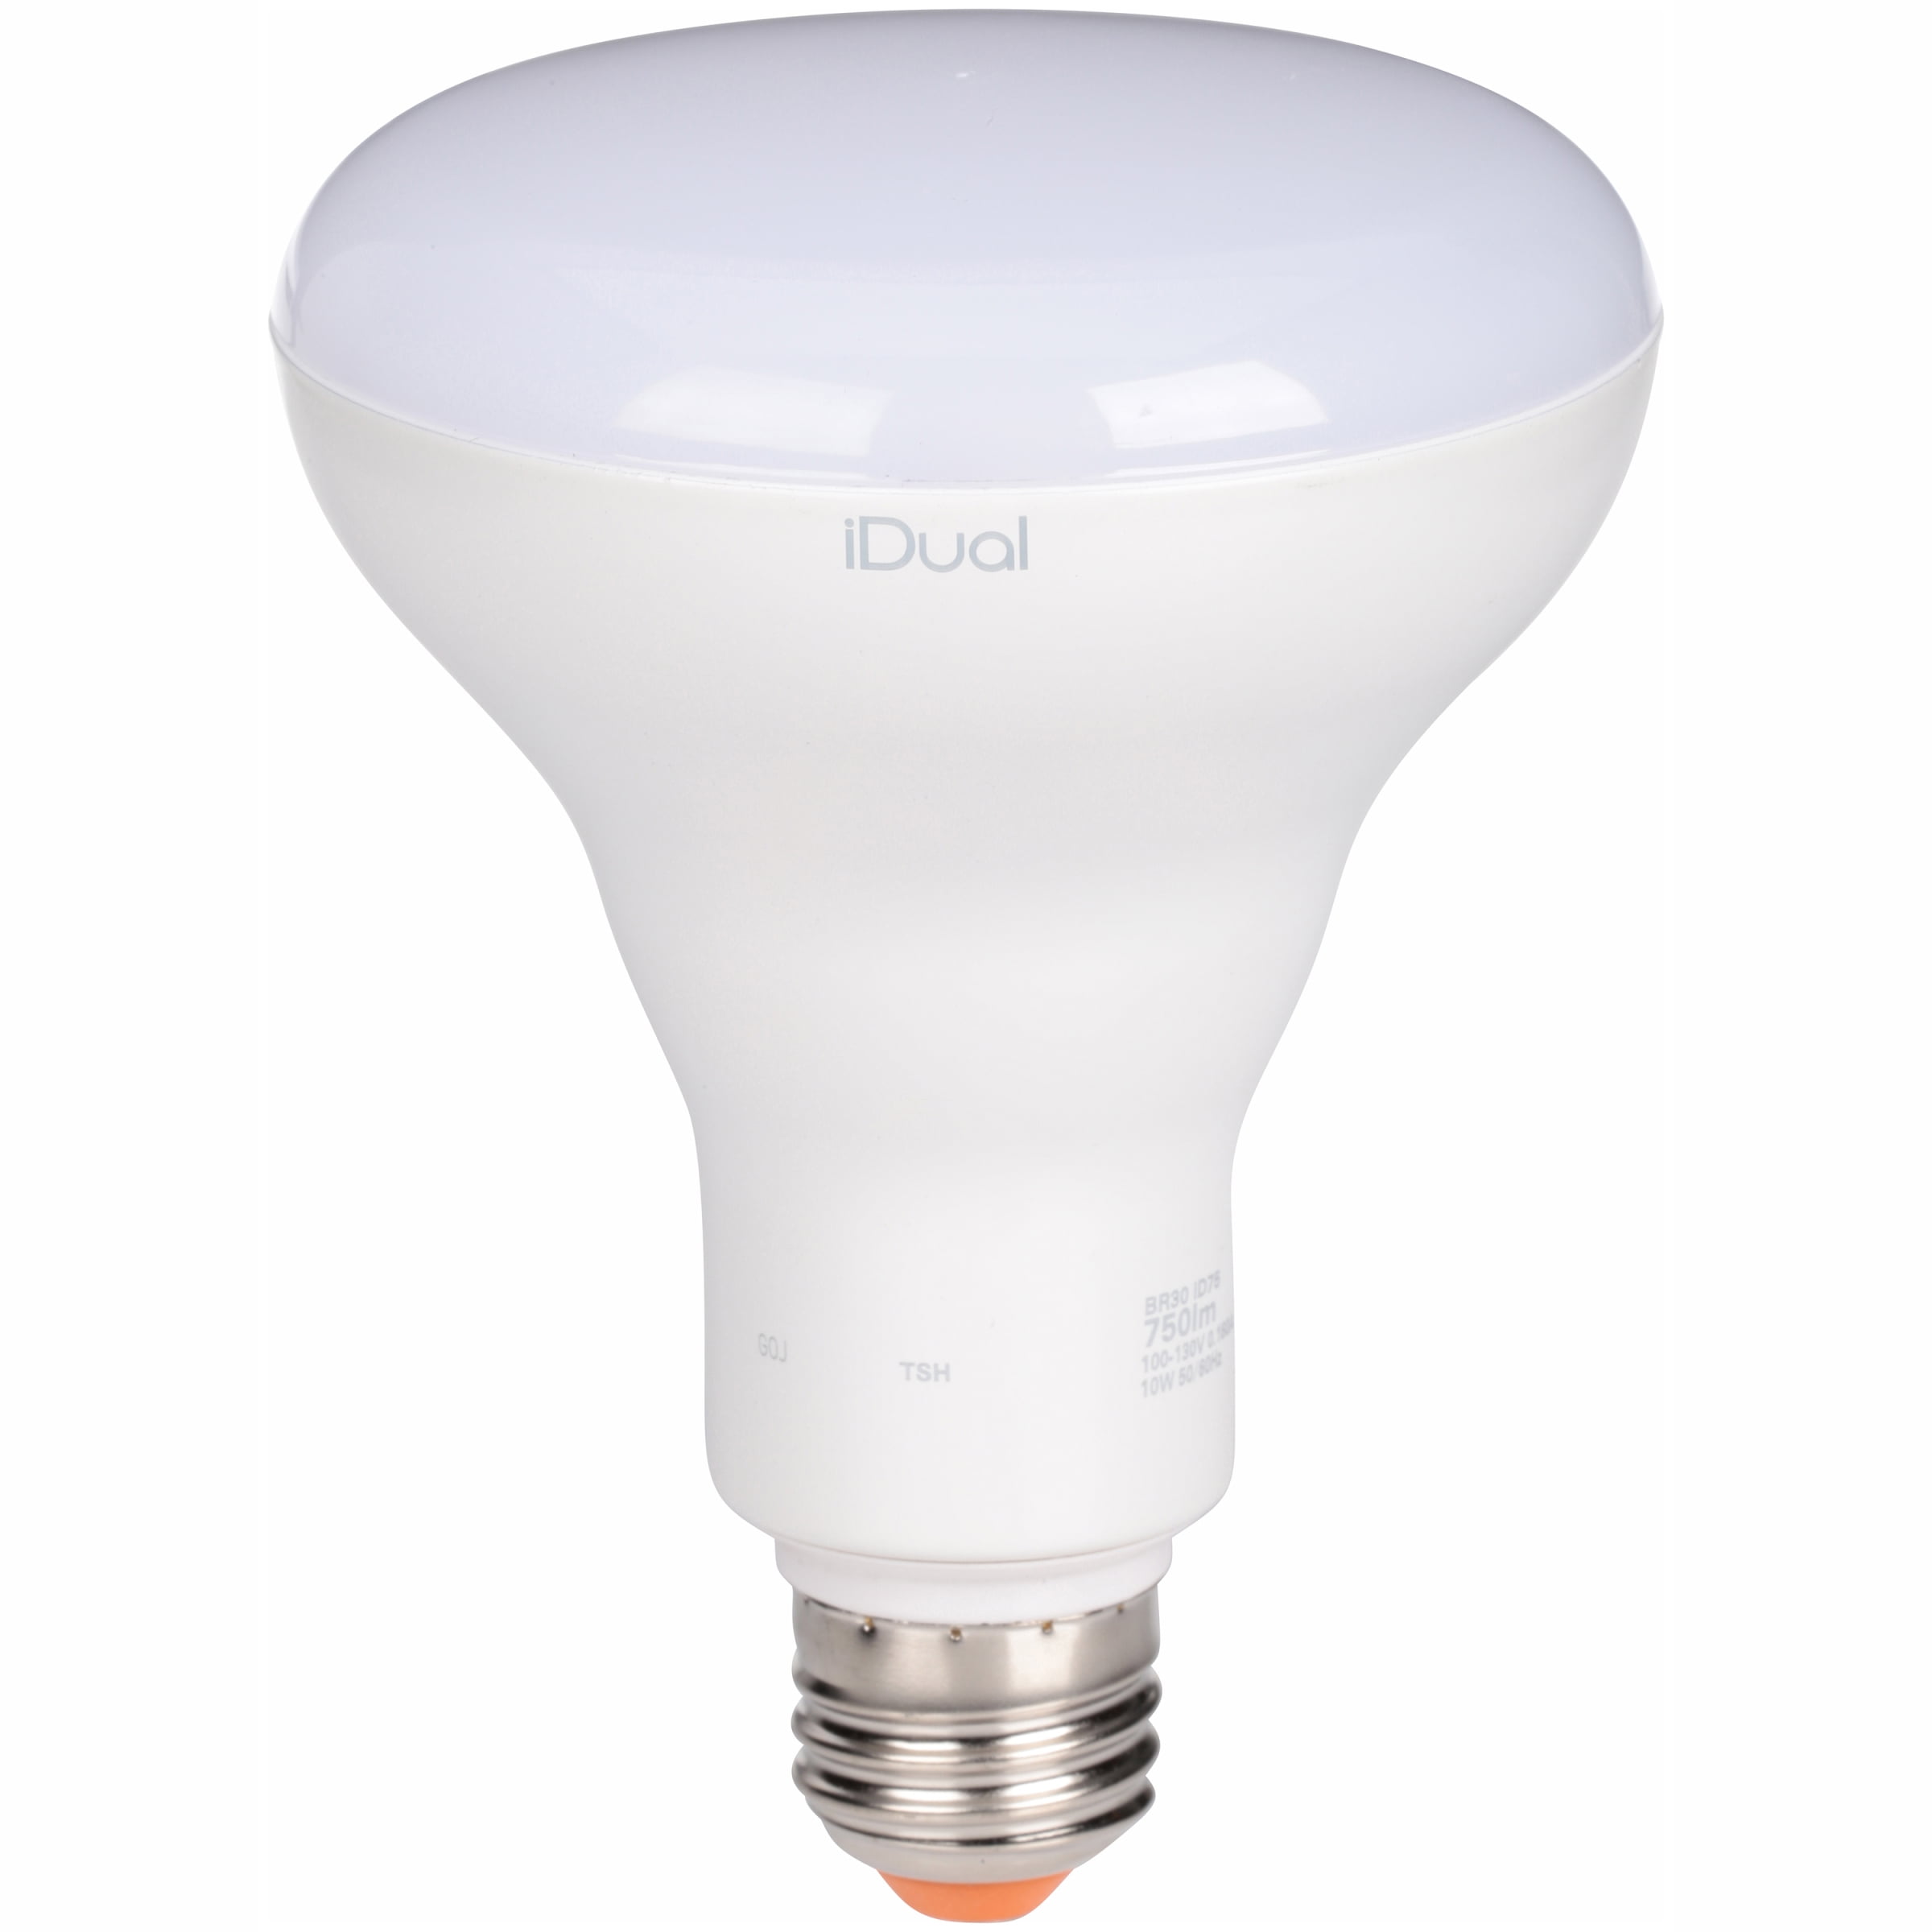 Afsnijden Charles Keasing Likken iDual® Light Bulb - Walmart.com